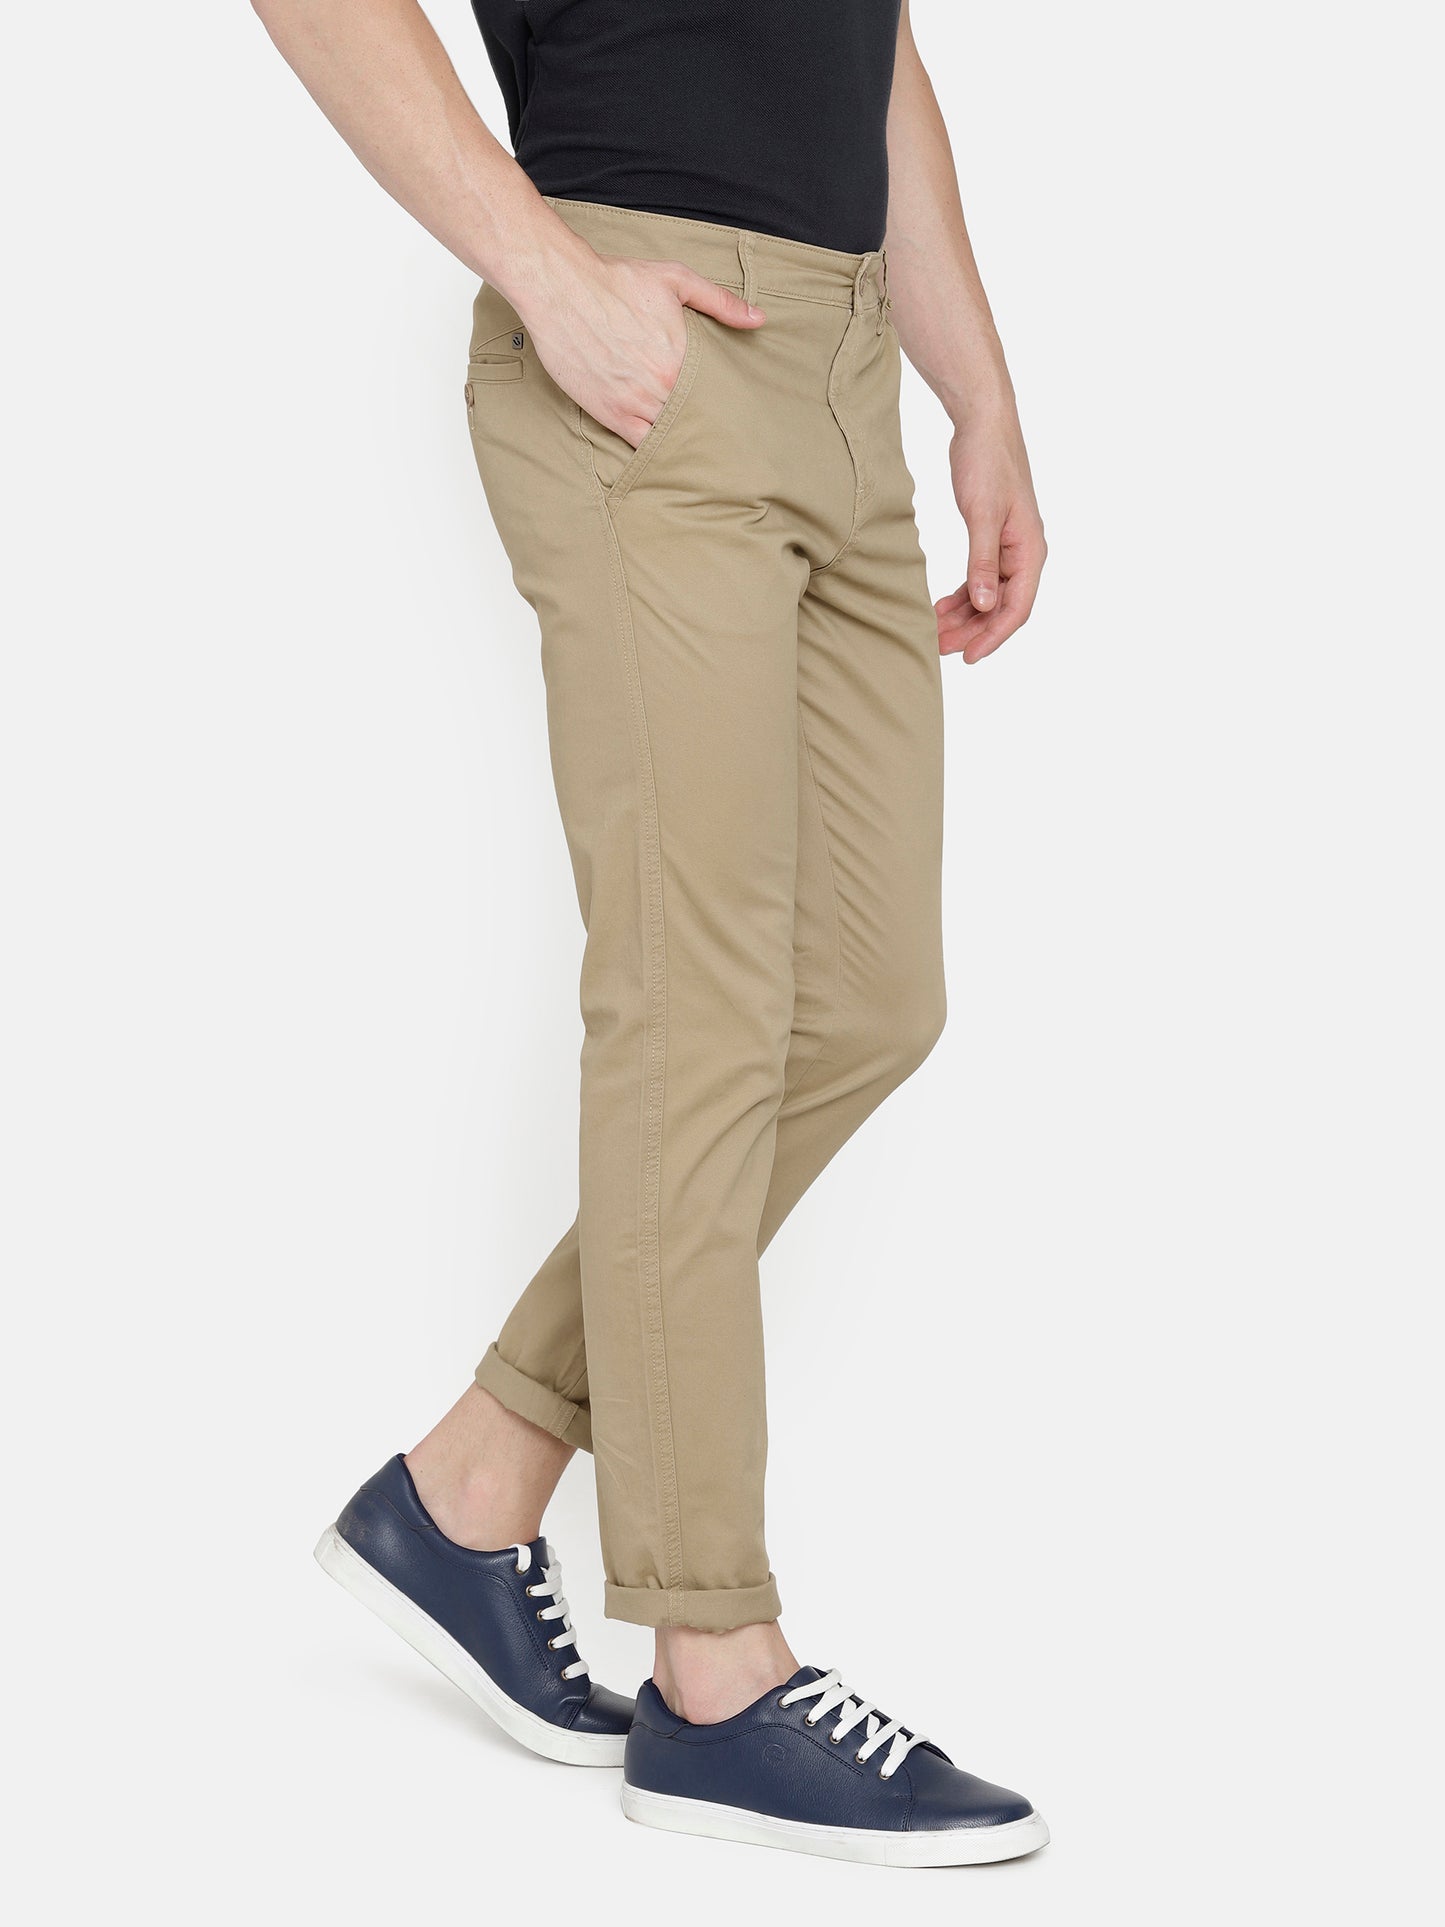 Casual Trousers in Light Khaki colour